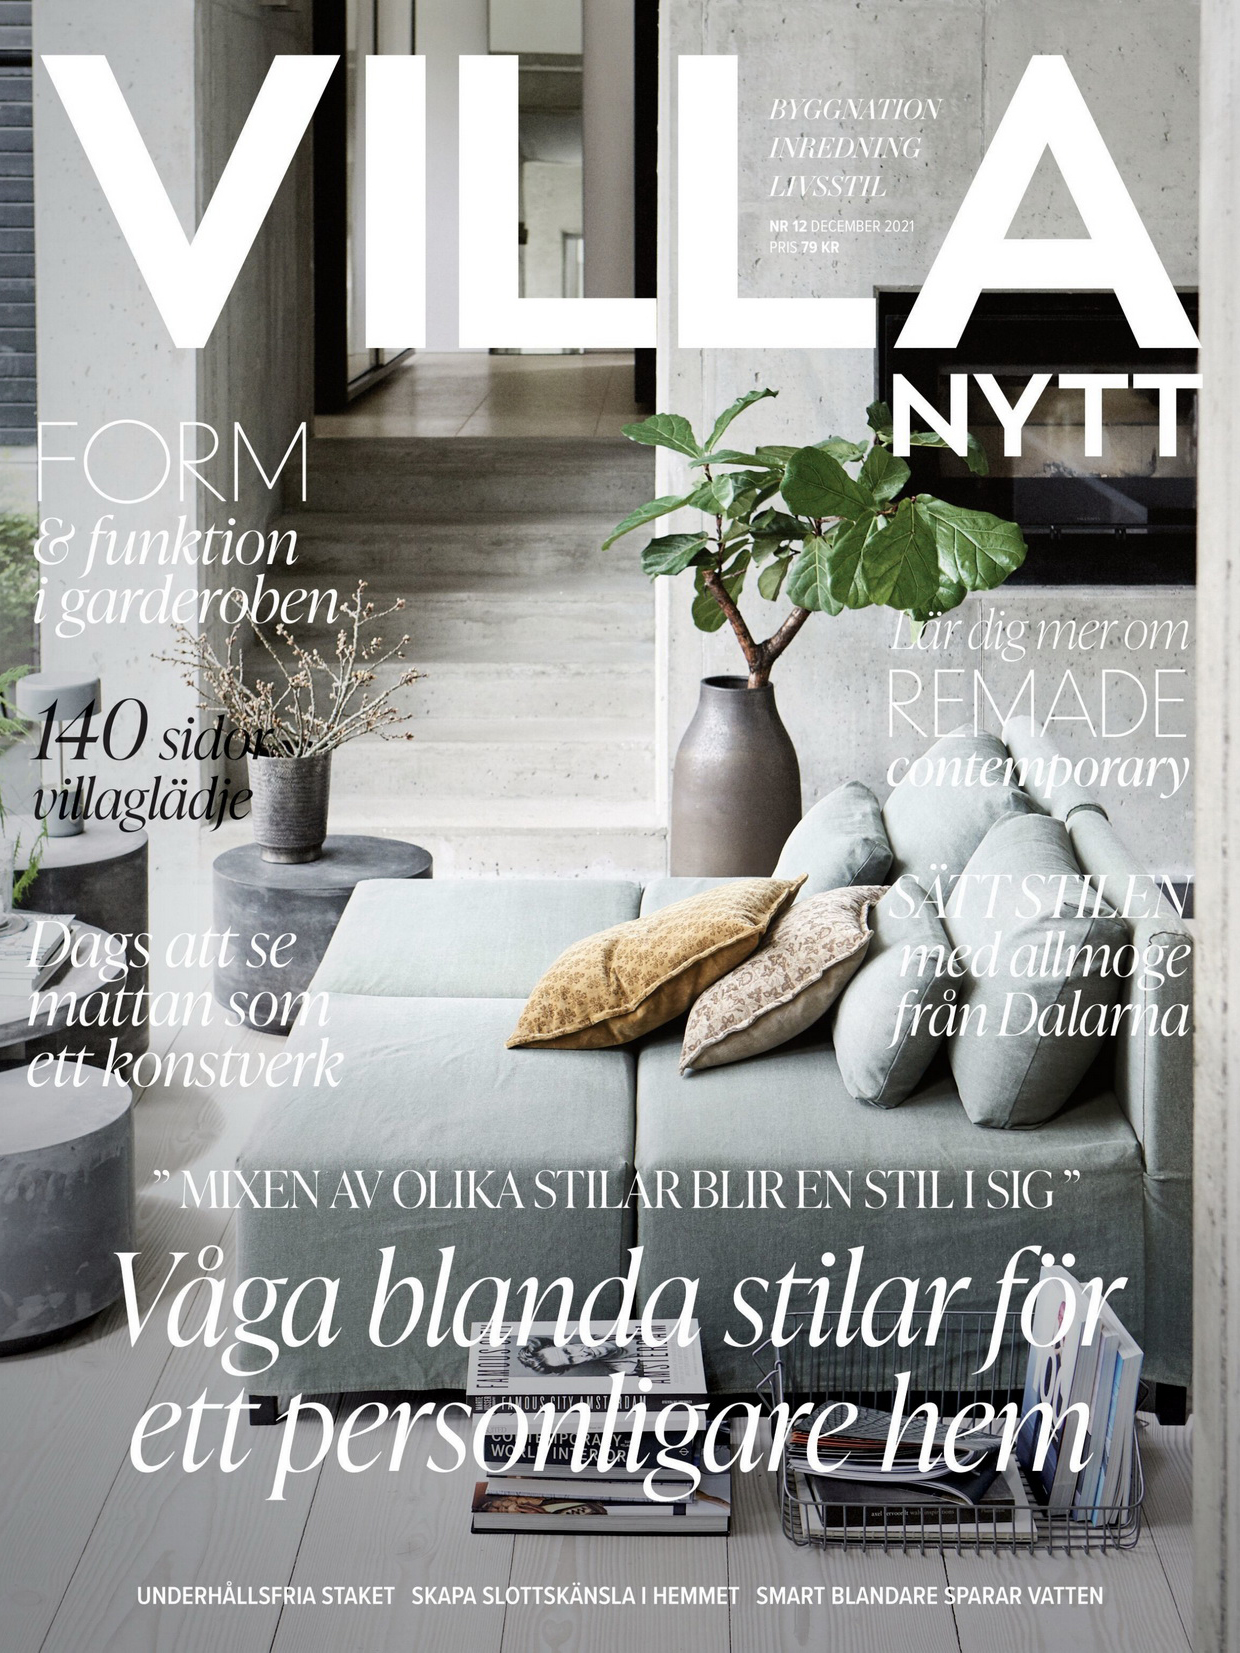 《Villanytt》瑞典室内设计趋势杂志2021年12月号